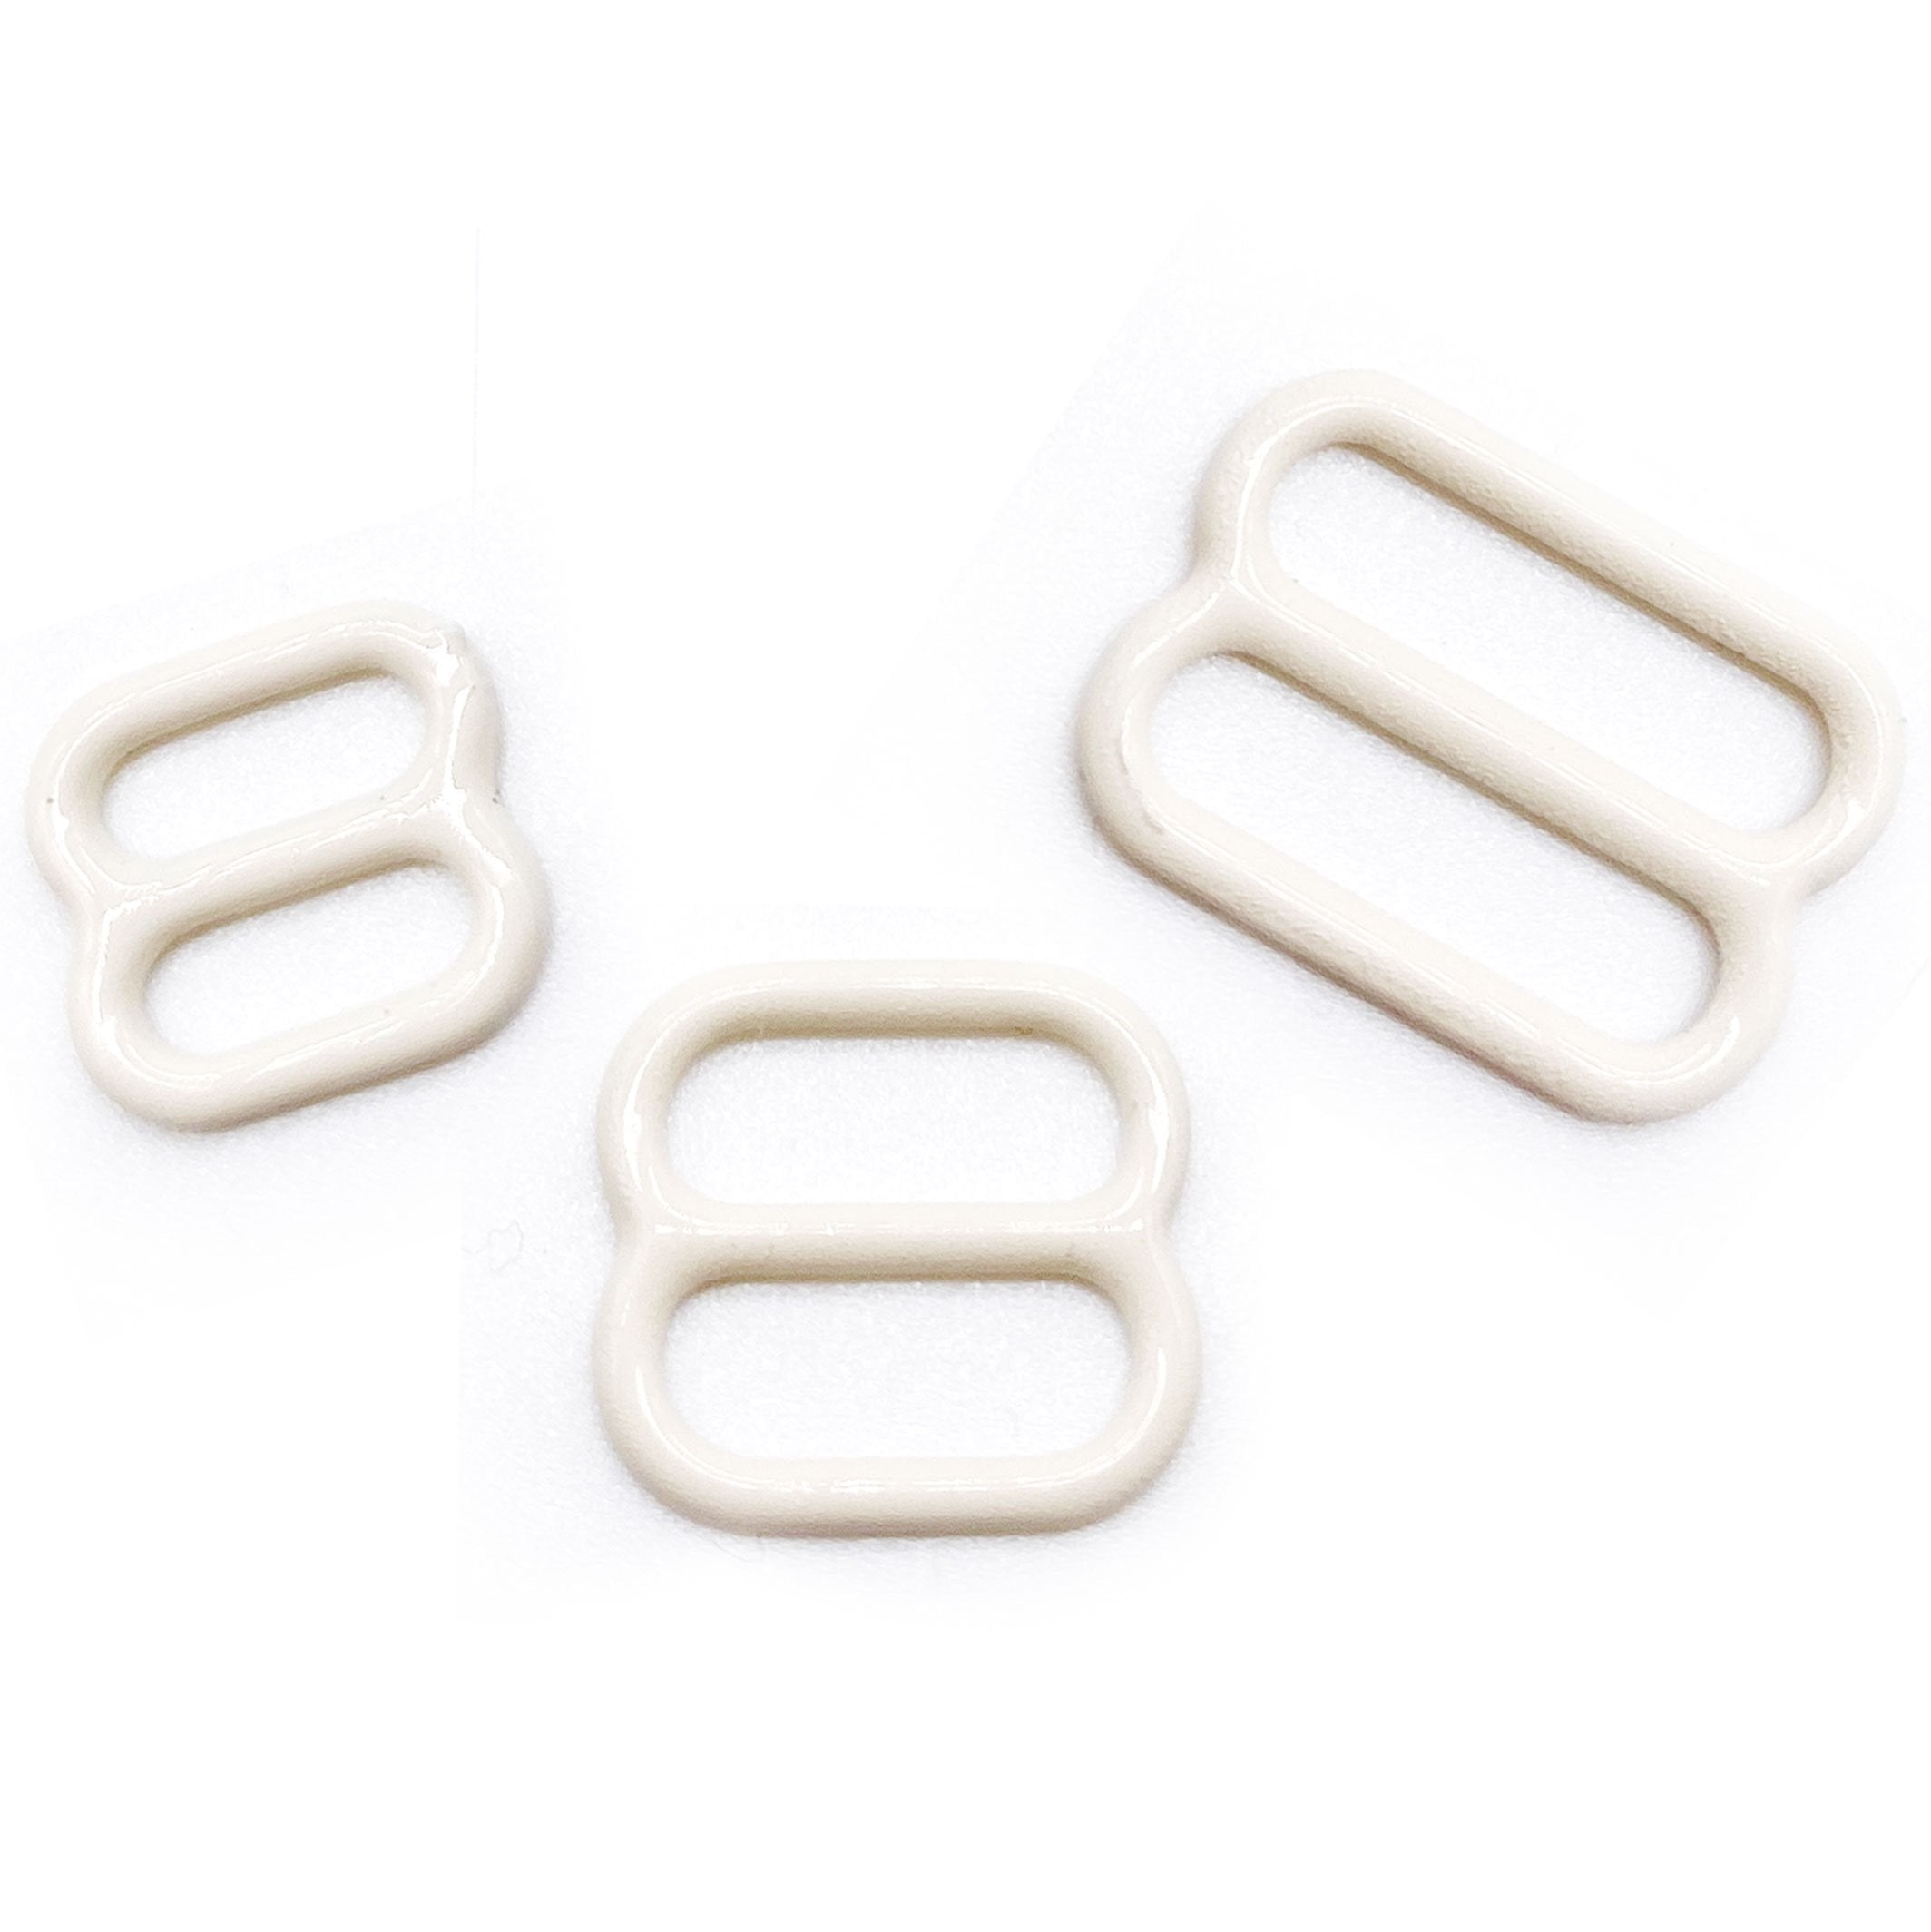 CLEARANCE- Set of 2 Rings OR 2 Sliders Bra Strap Sliders in Elegant Ivory for Bra making or Swimwear - 1/4"/6mm, 3/8"/10mm, 1/2"/12mm-Stitch Love Studio